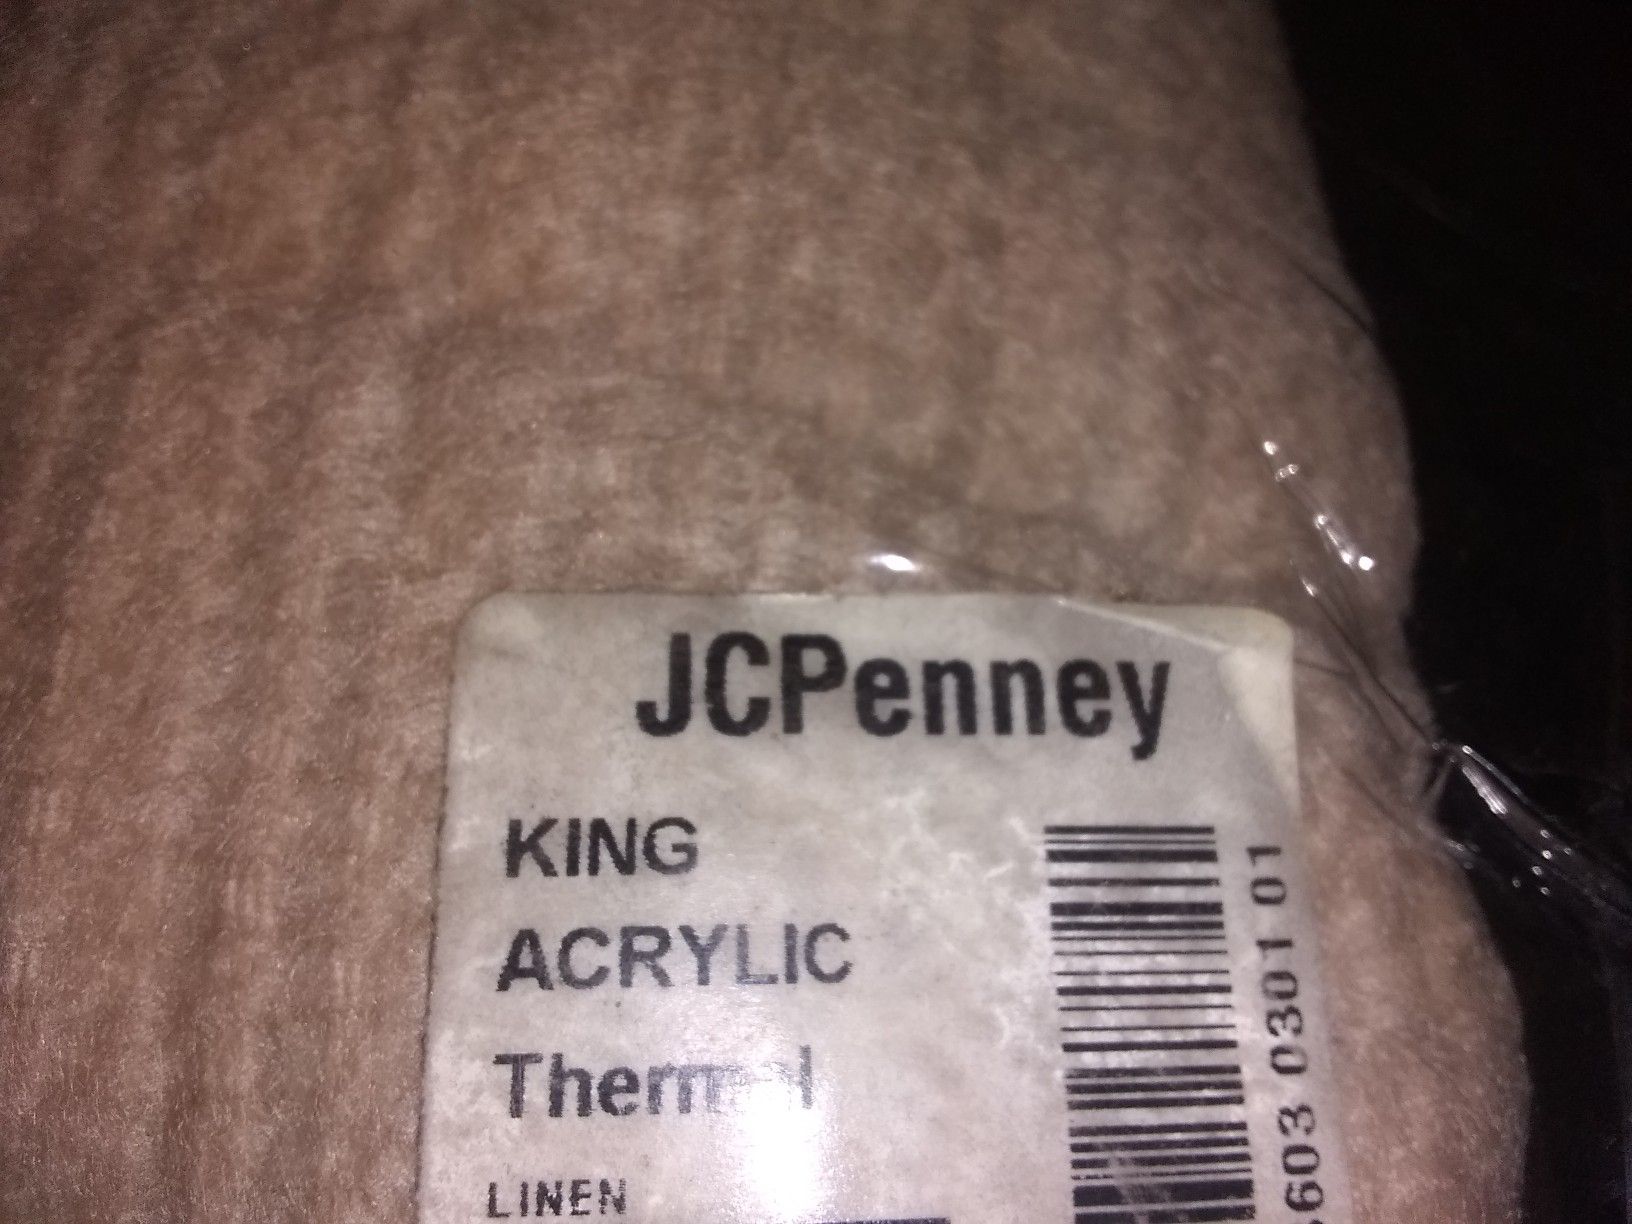 King Acrylic Thermal blanket